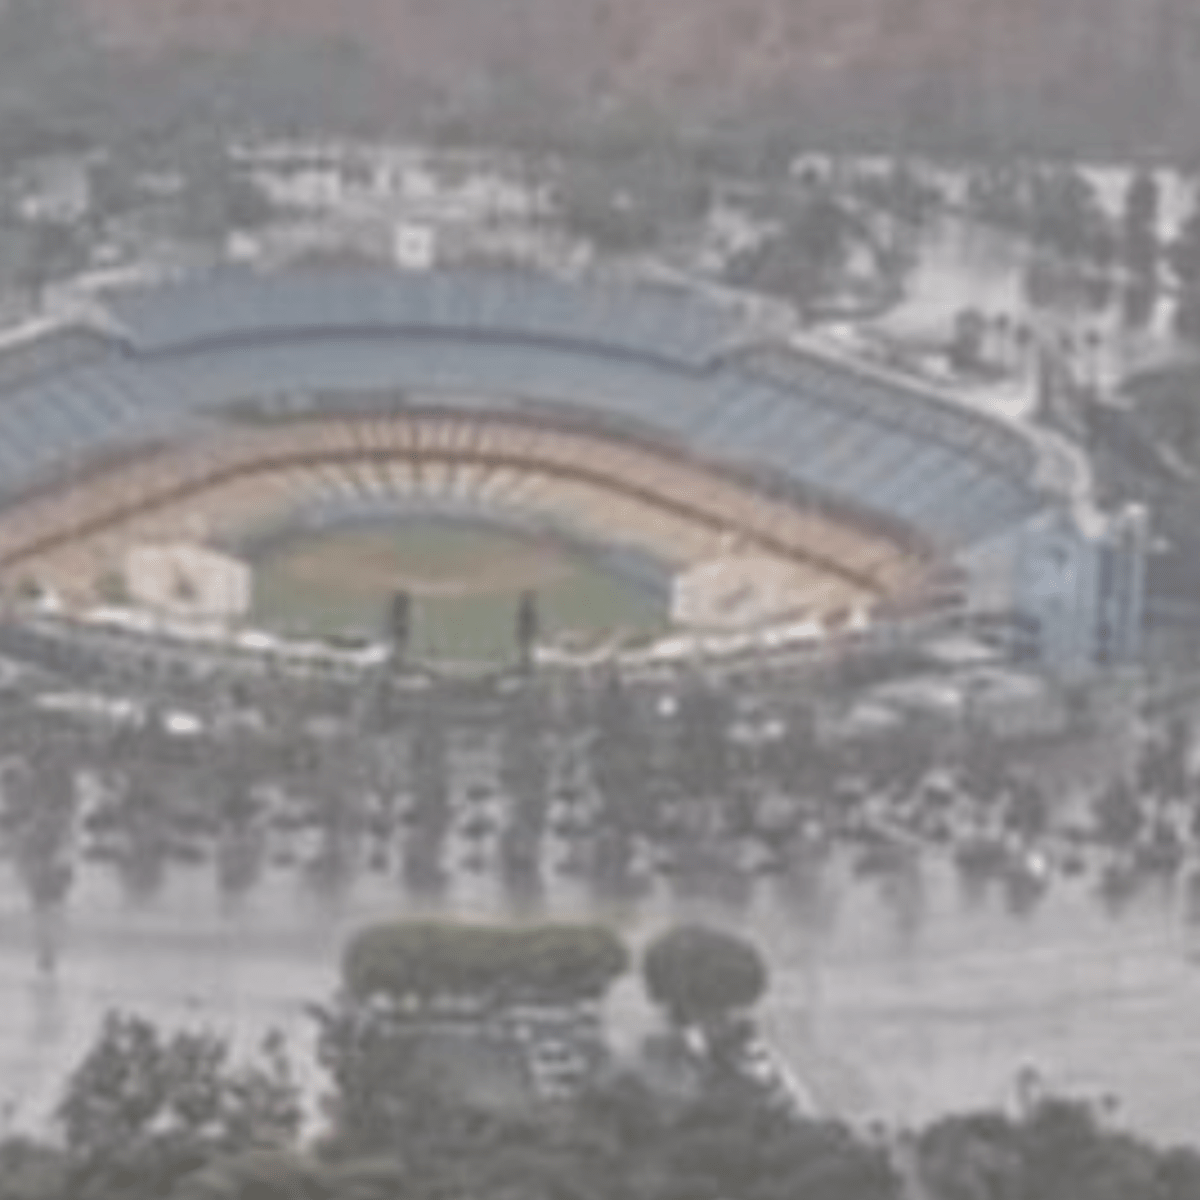 Jarring Dodger Stadium flood picture has fans wondering what's next